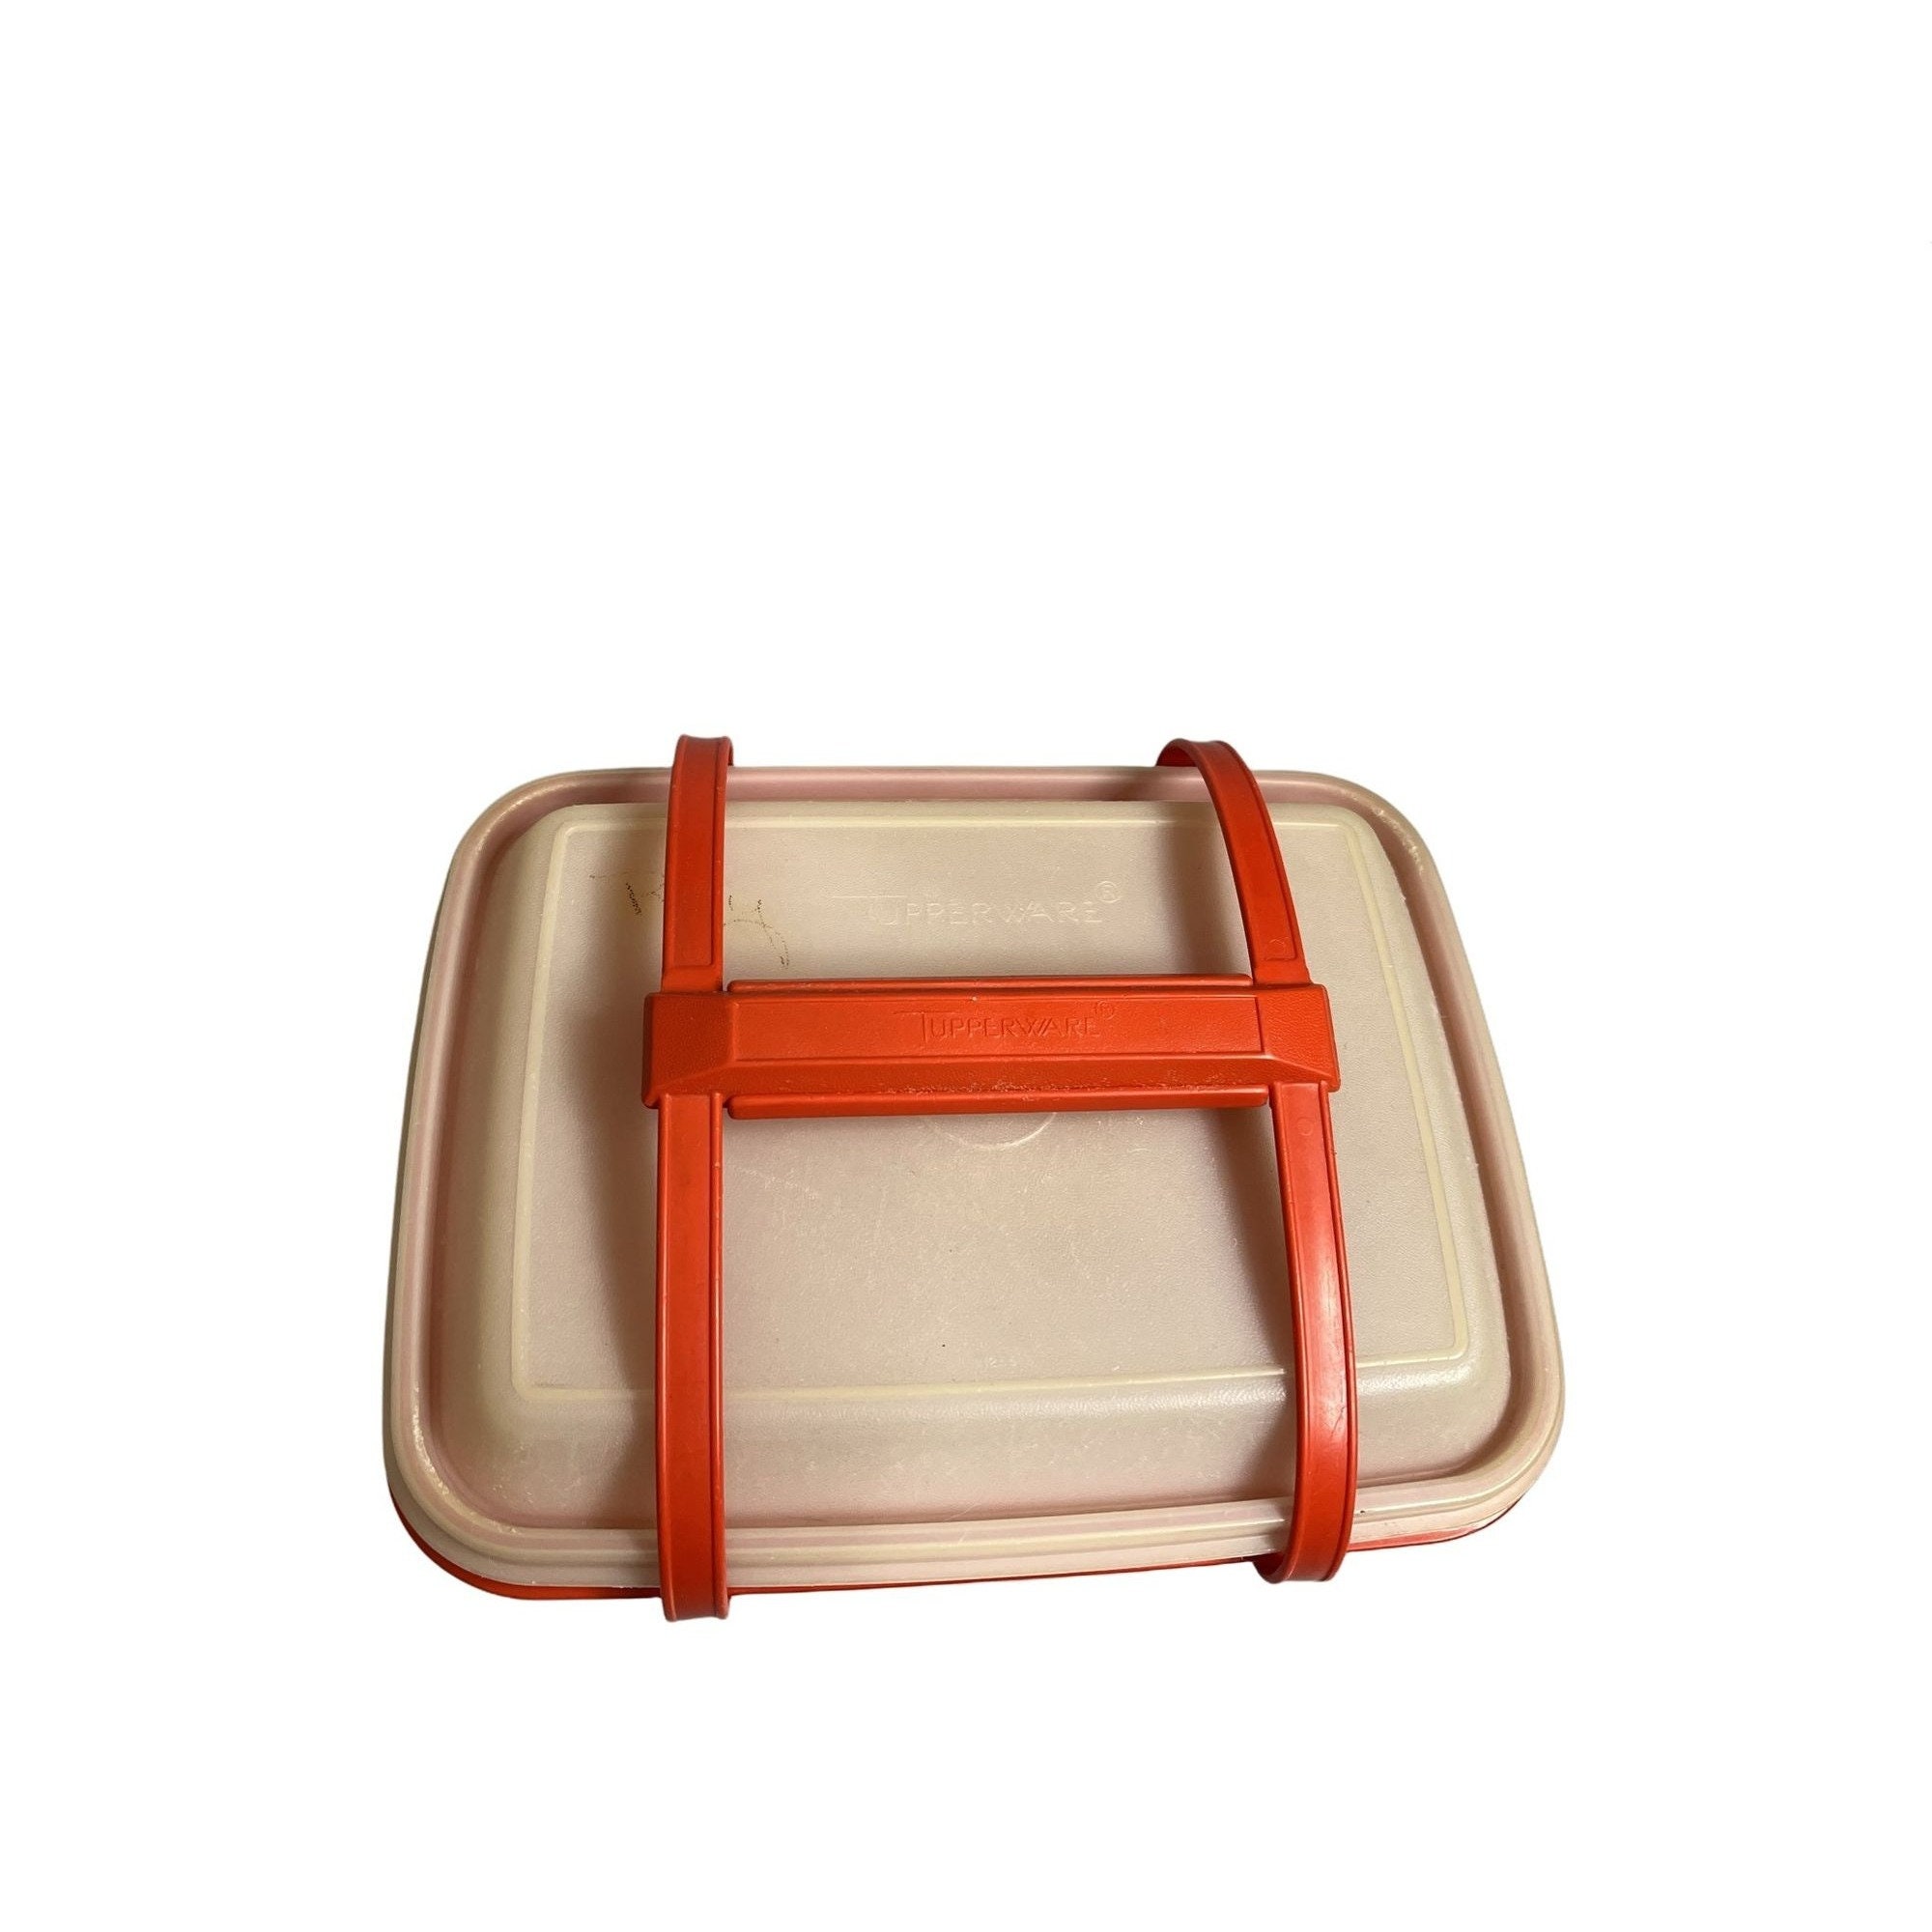 Vintage Tupperware Insulated Lunchbox Set - burgundy,… - Gem